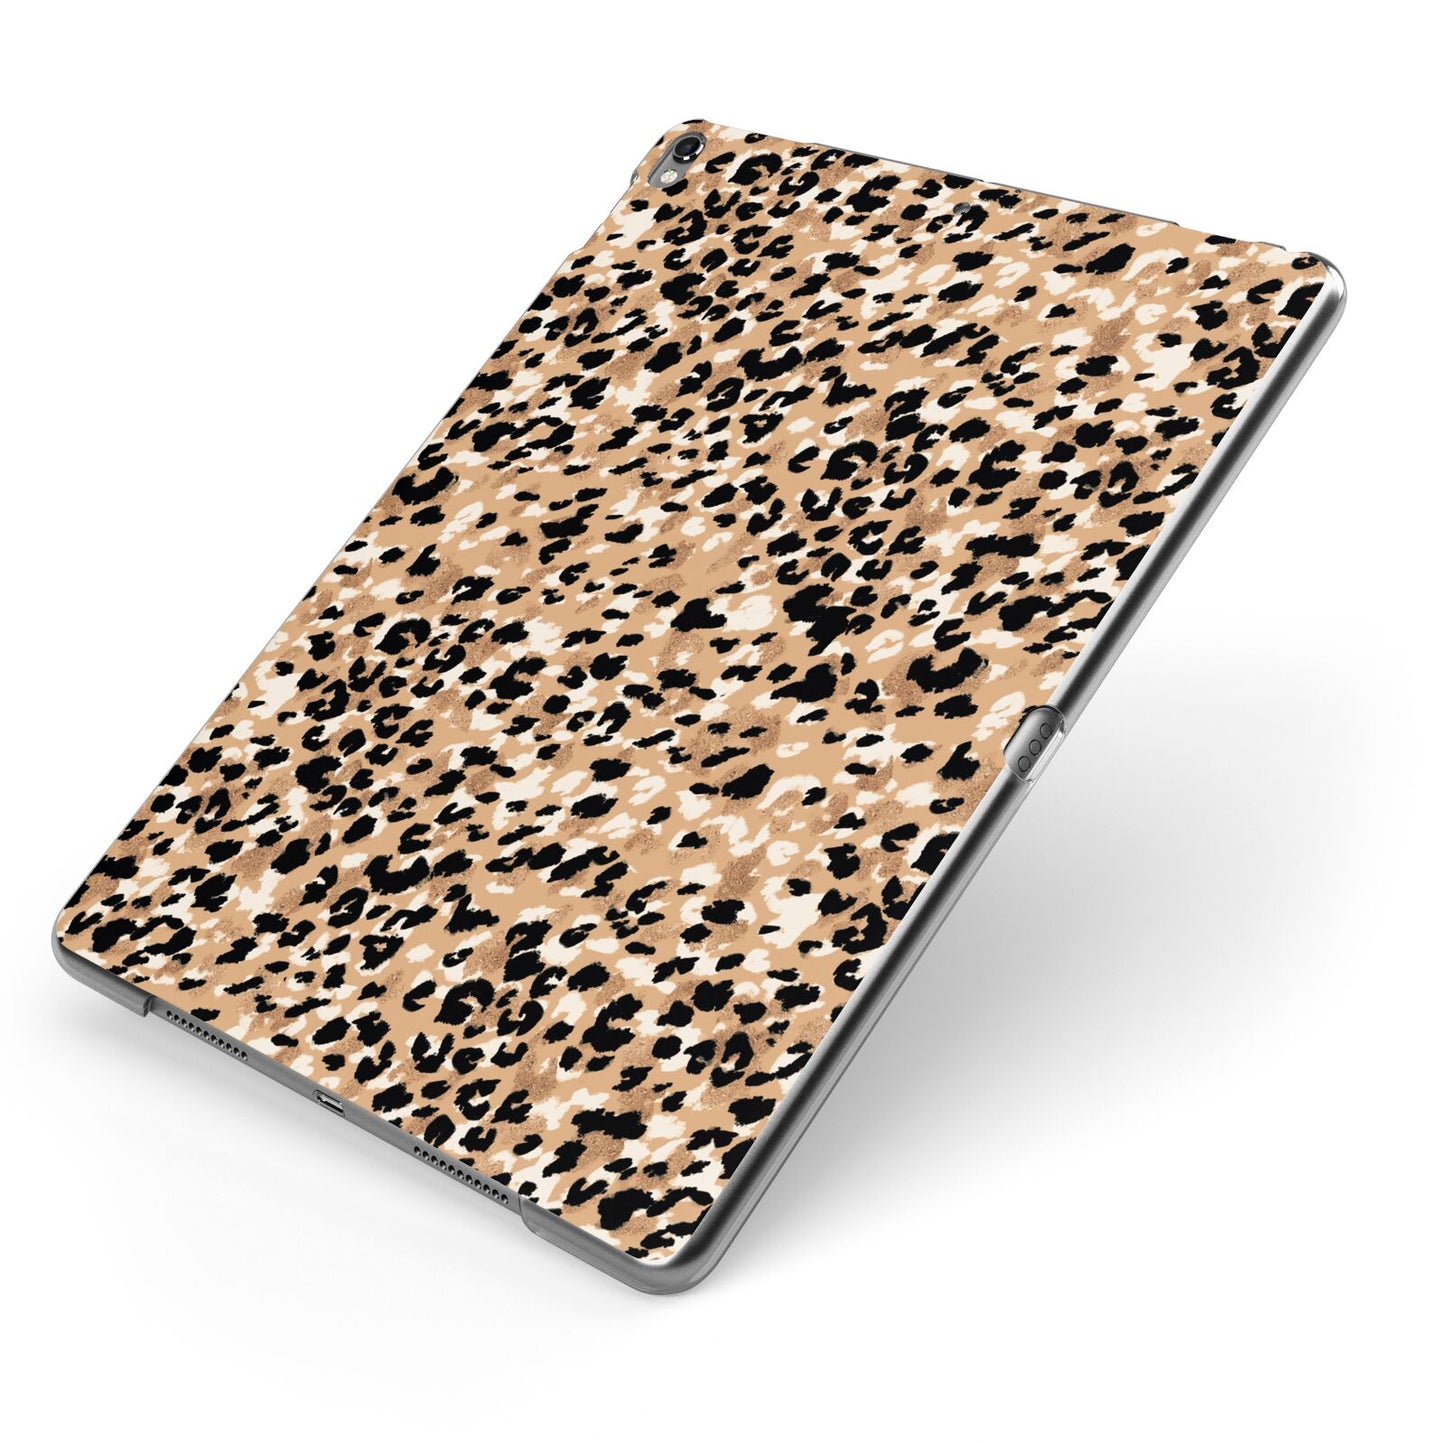 Leopard Print Apple iPad Case on Grey iPad Side View